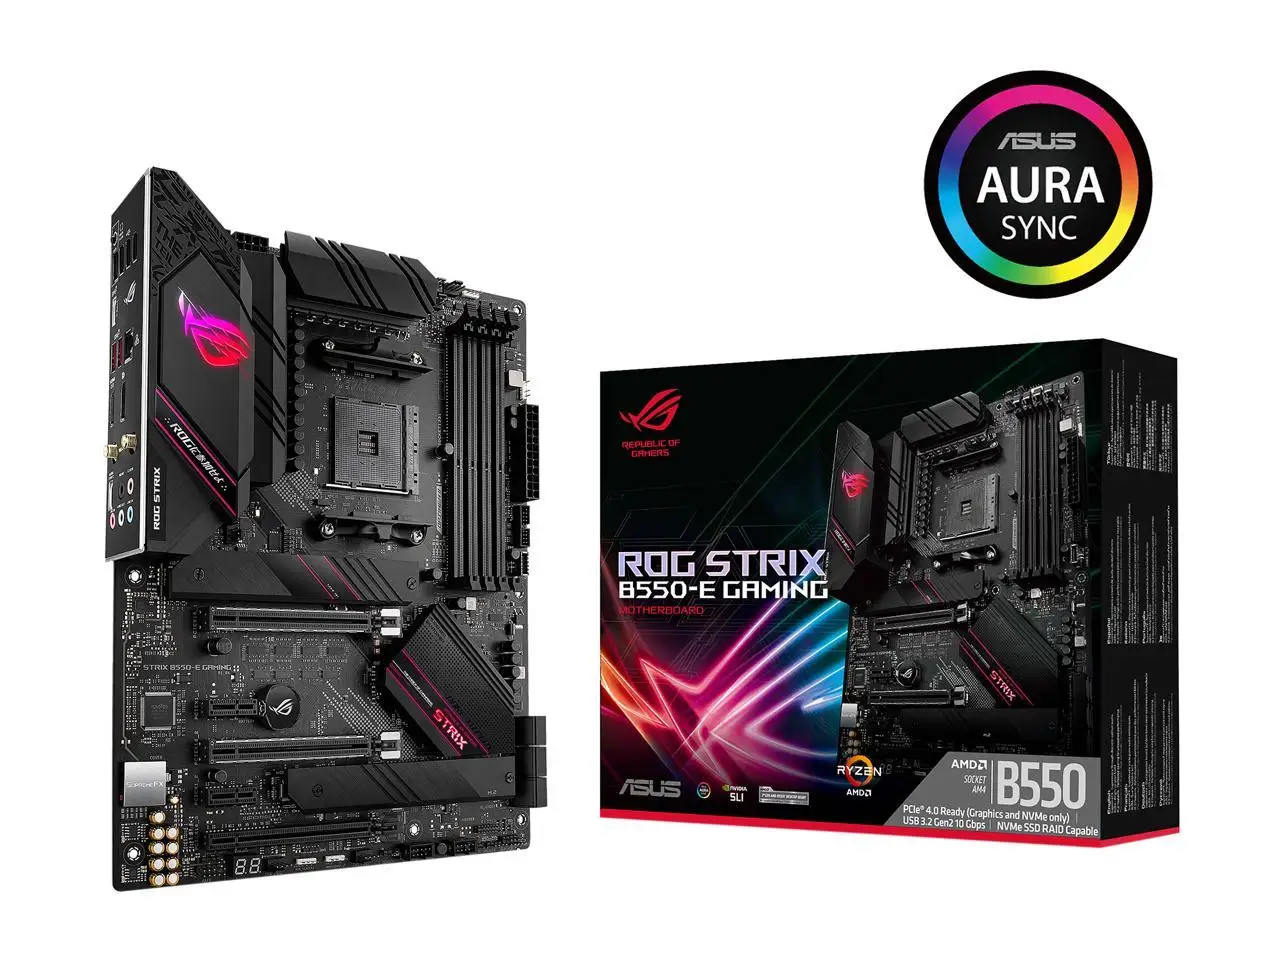 

ASUS ROG Strix B550-E Gaming AMD AM4 (3rd Gen Ryzen) ATX Gaming Motherboard (PCIe 4.0, NVIDIA SLI, WiFi 6, 2.5Gb LAN, 14+2 Power